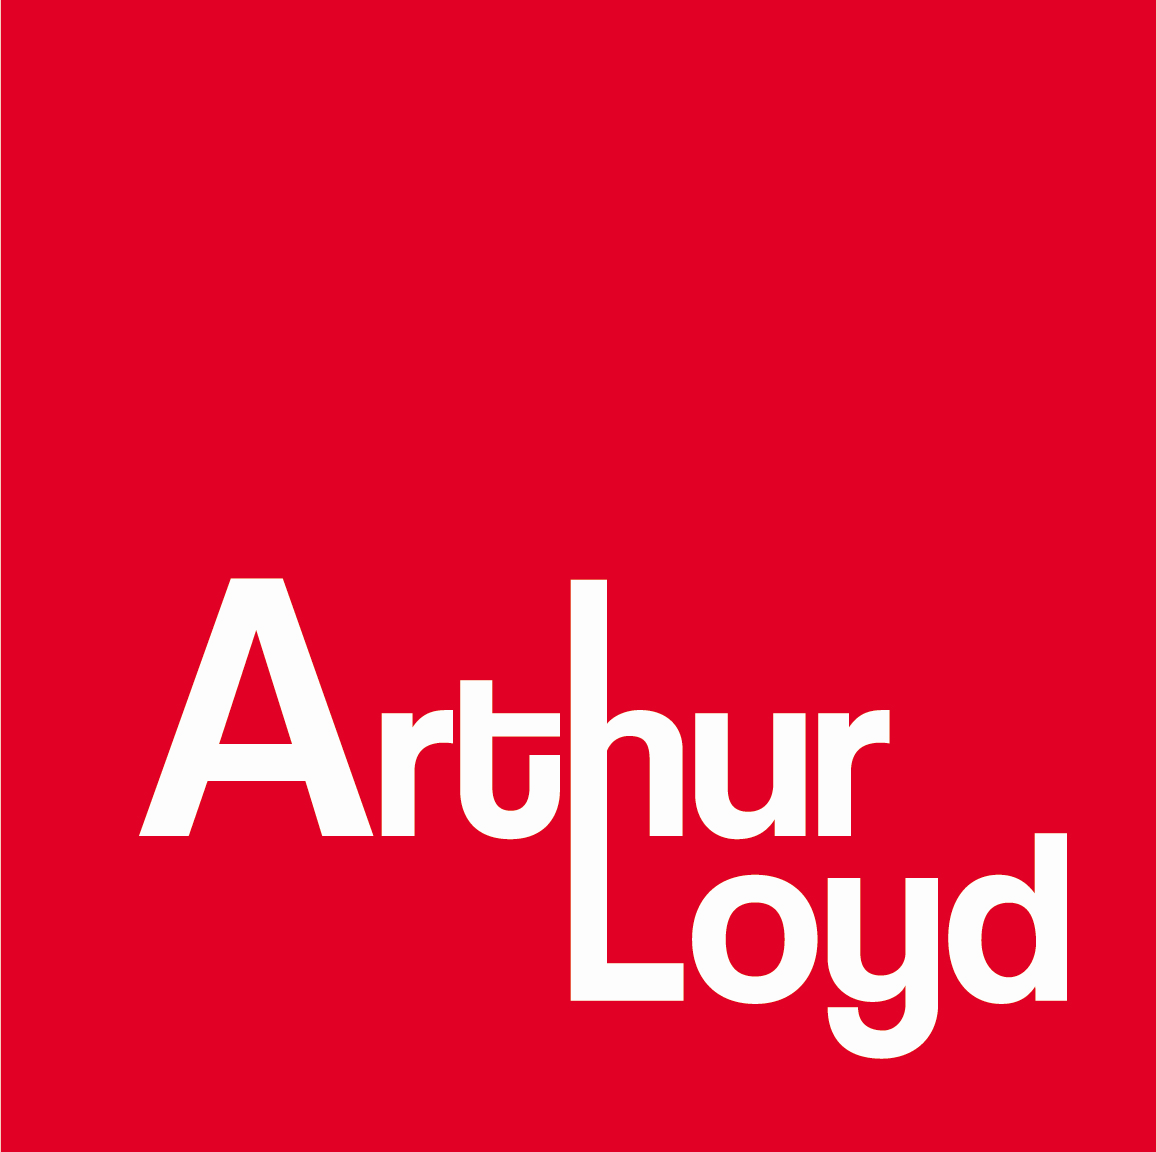 arthur-loyd